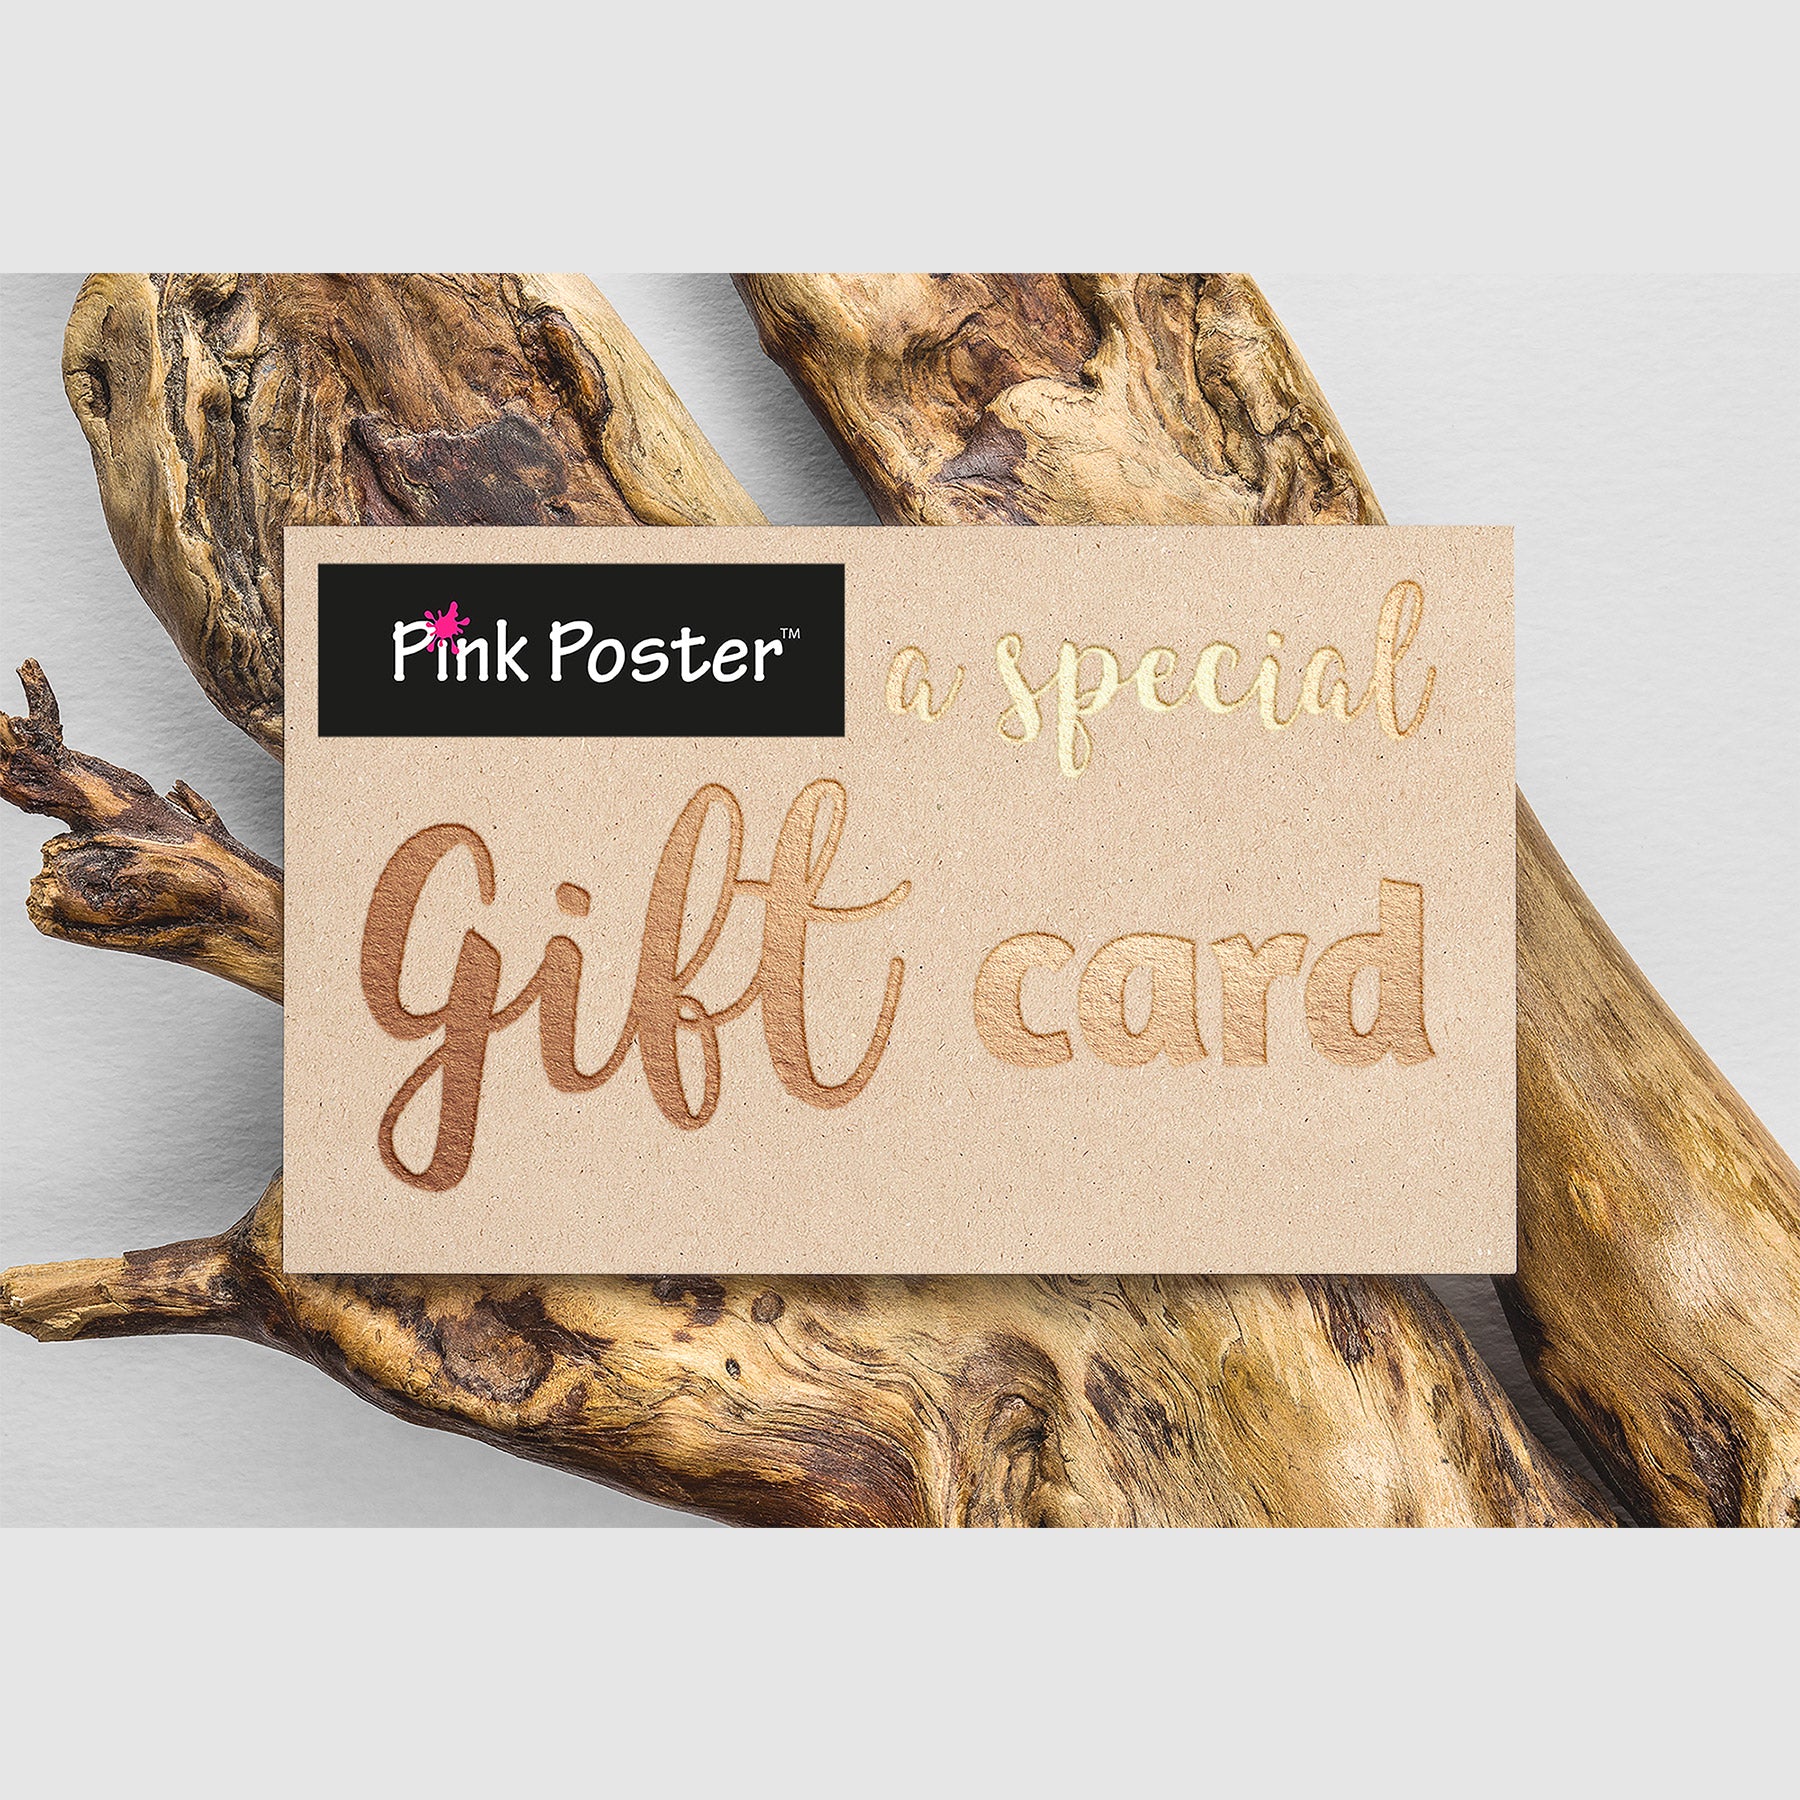 pinkposter gift card 0ea25023 35dc 4c2c 9efa 8edabb87336e